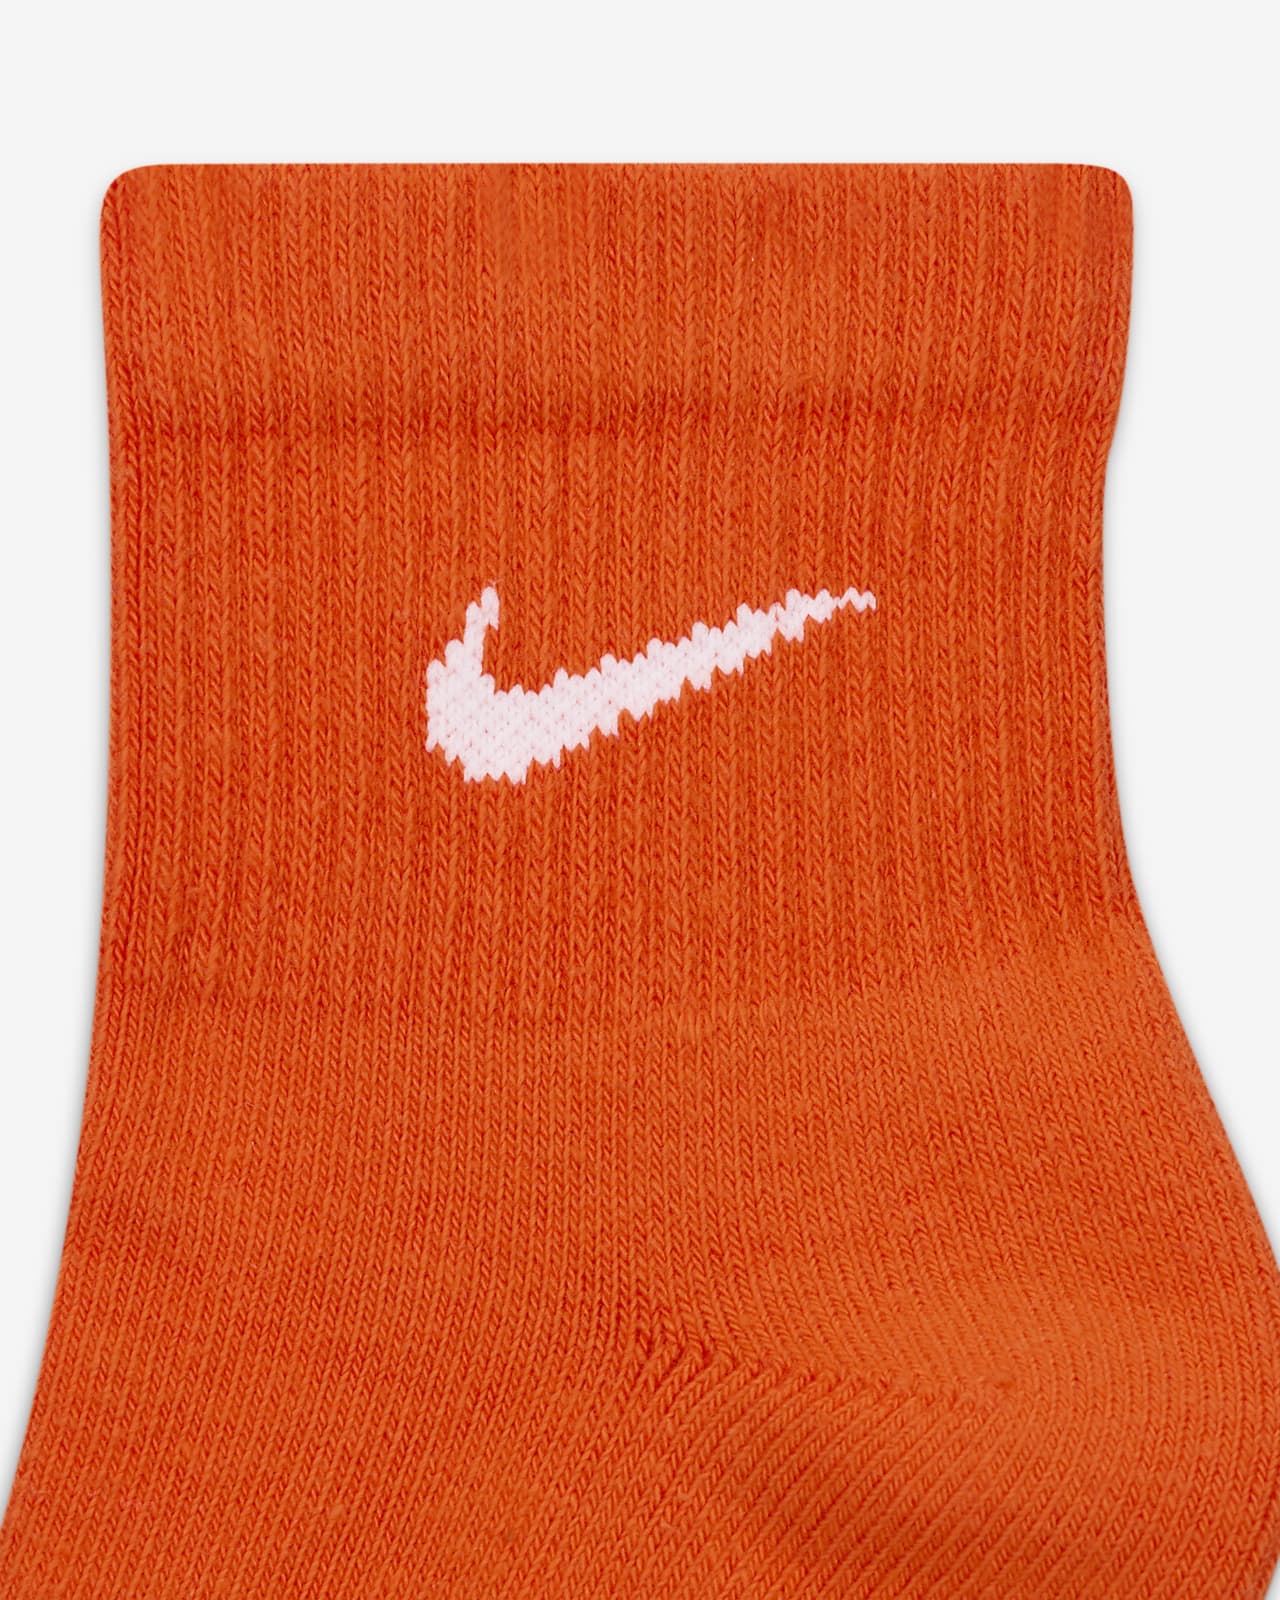 Nike Everyday Plus Cushioned Training Ankle Socks (3 Pairs).